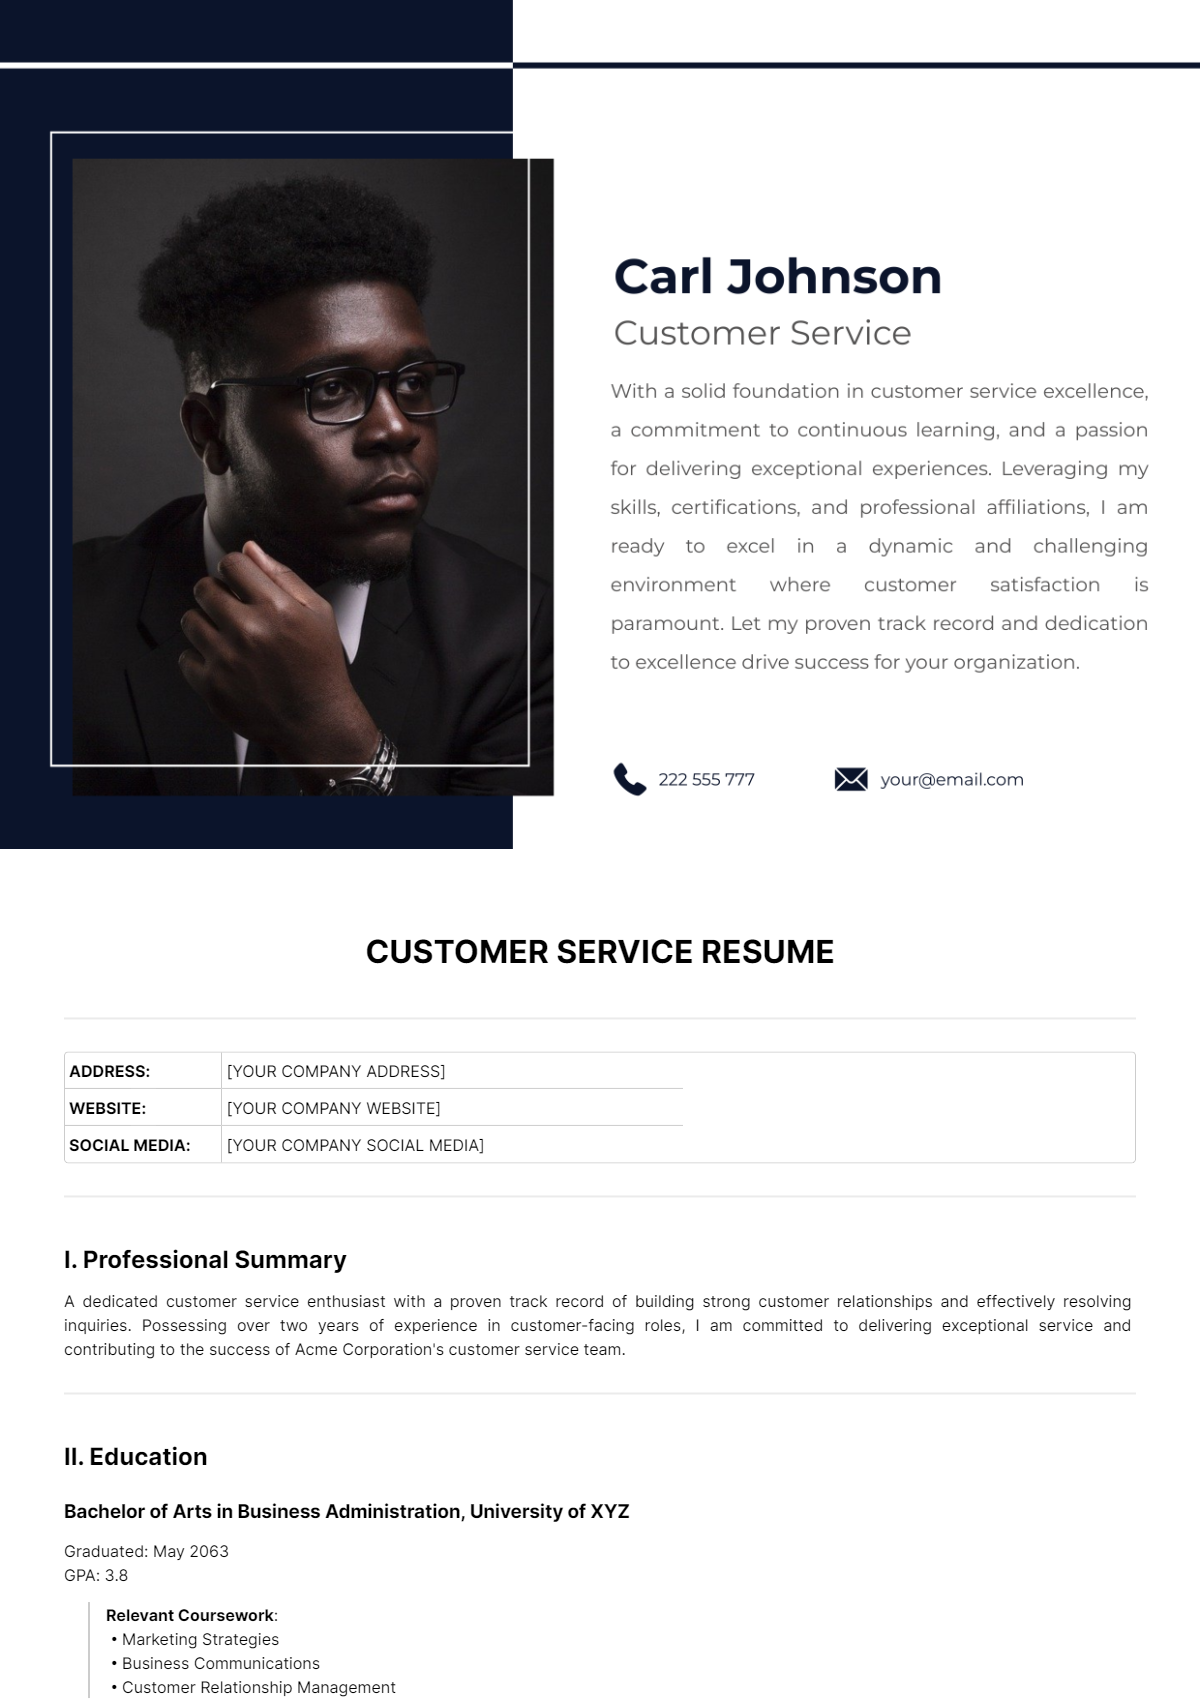 Customer Service Resume Template